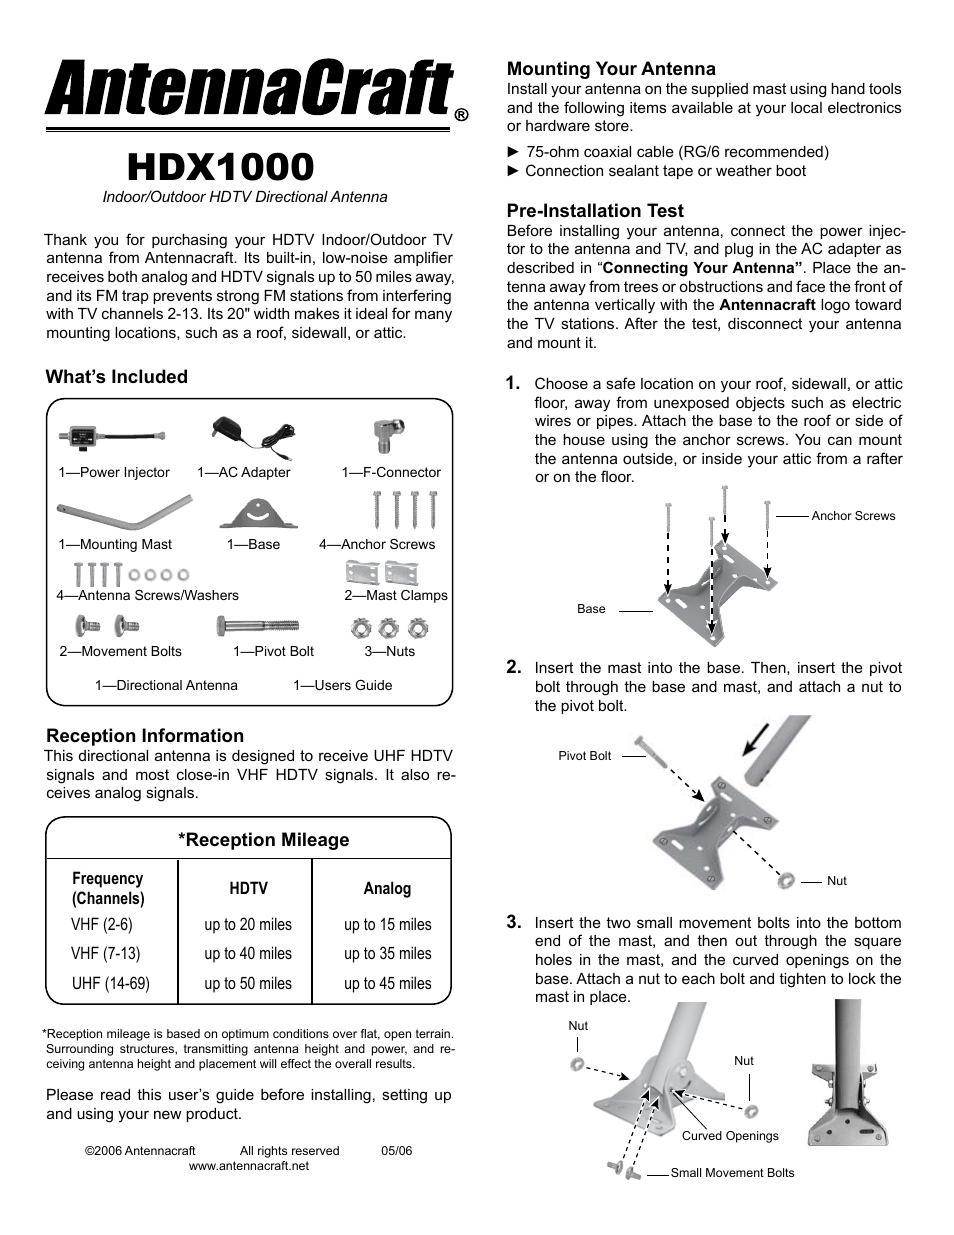 HDX1000